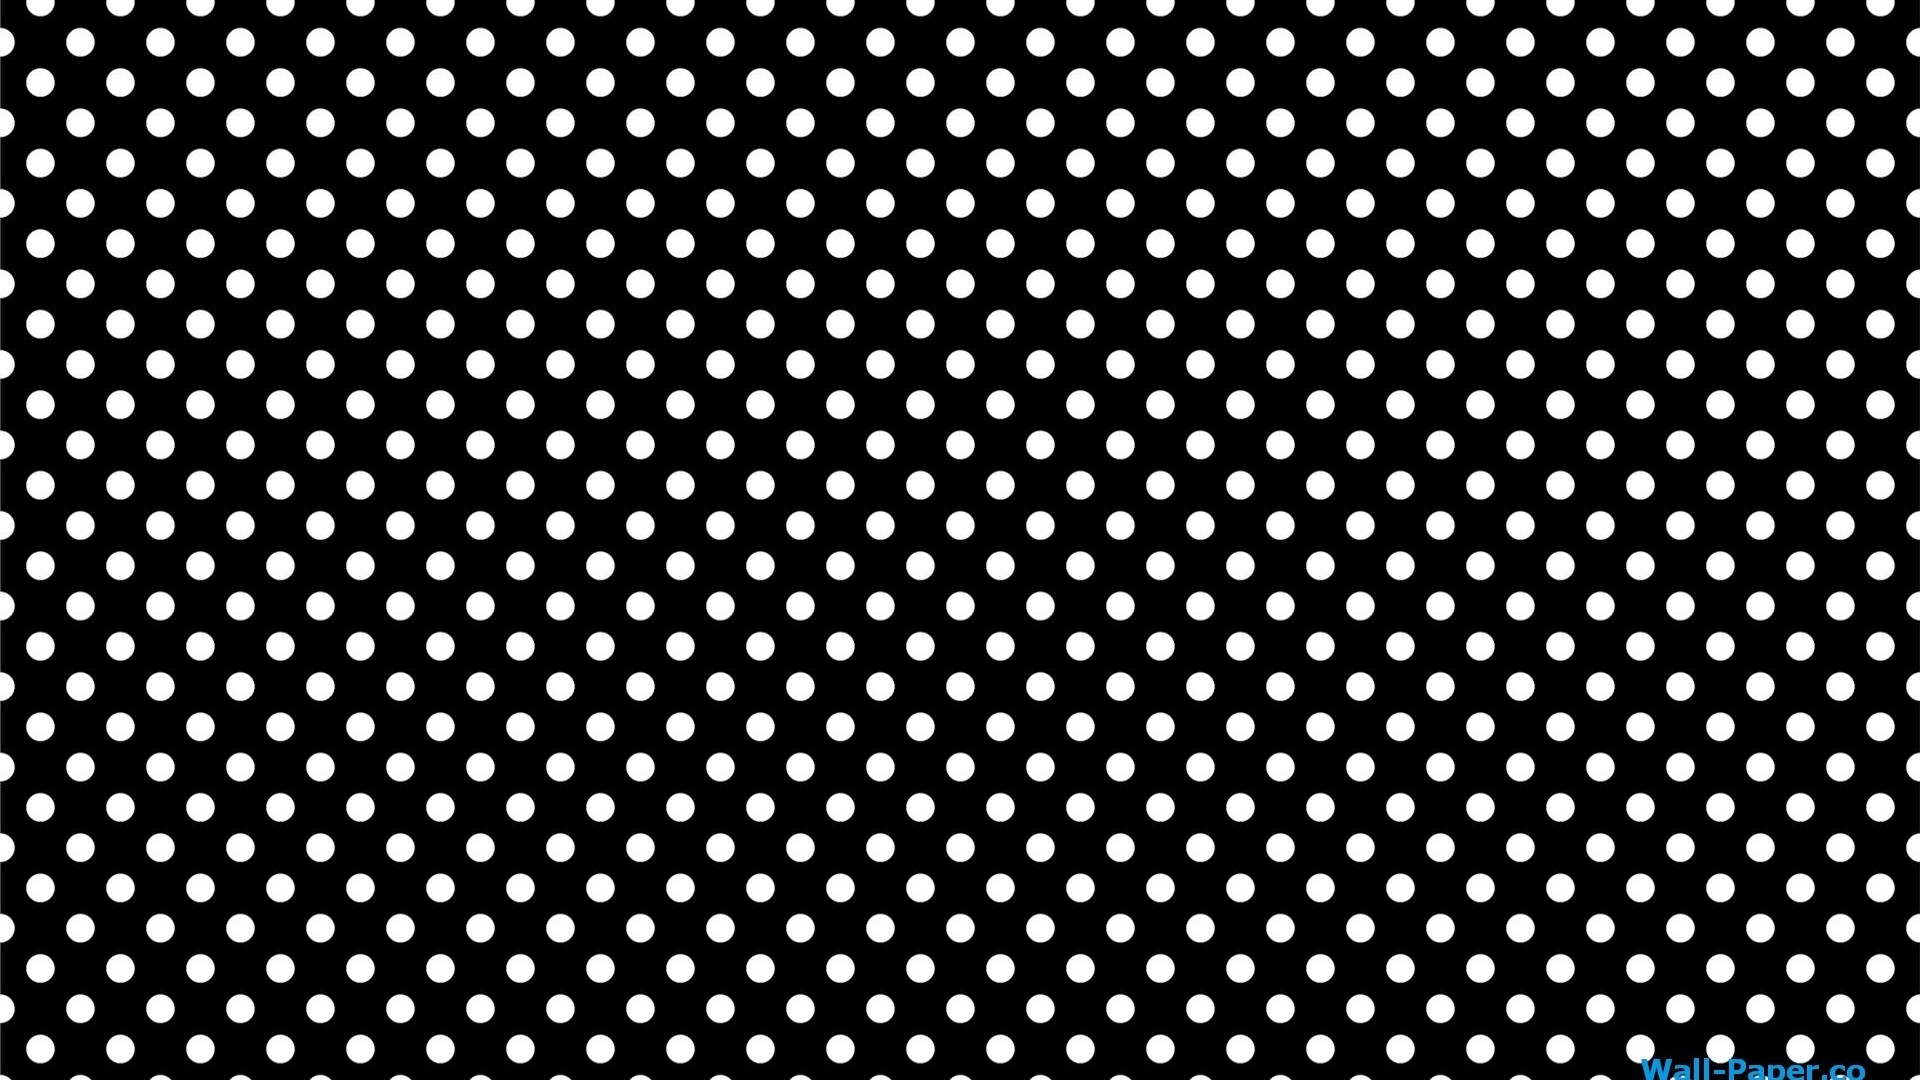 White and Black Polka Dot Nail Art Design - wide 7